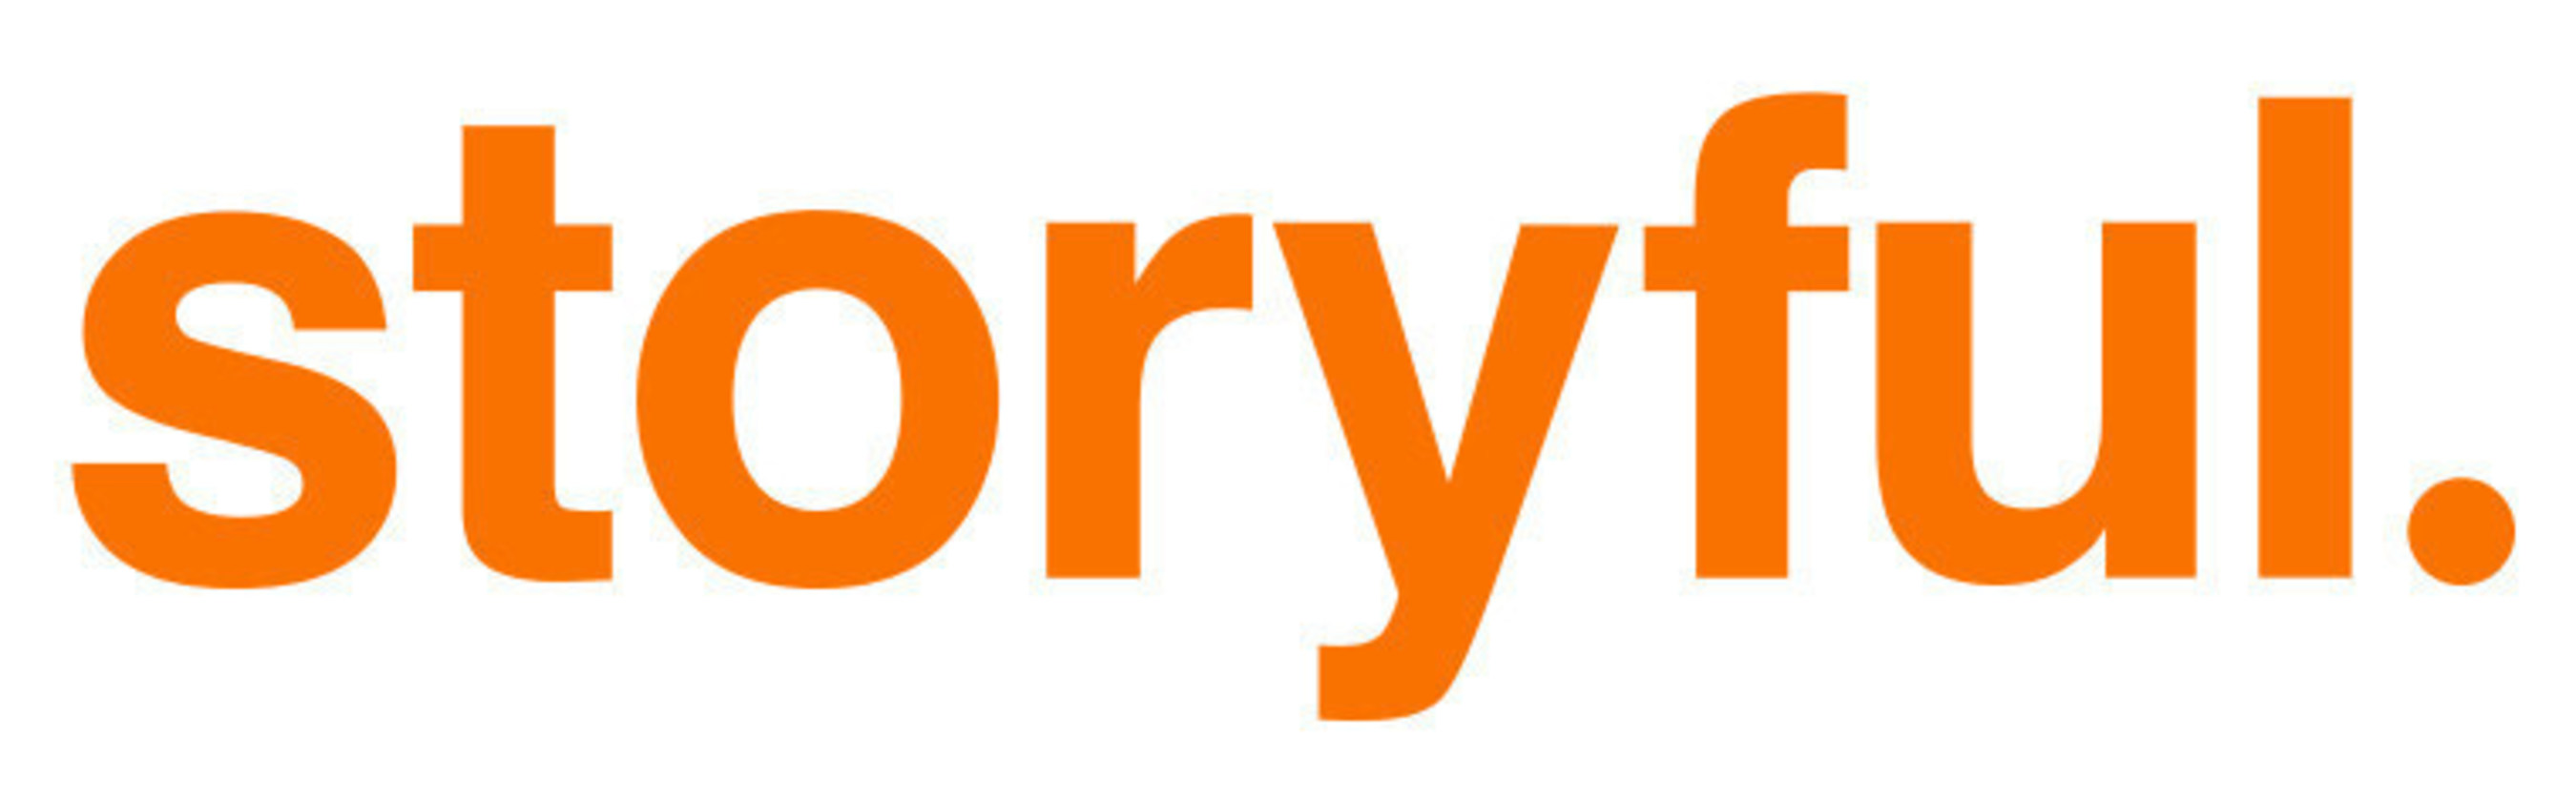 Storyful logo